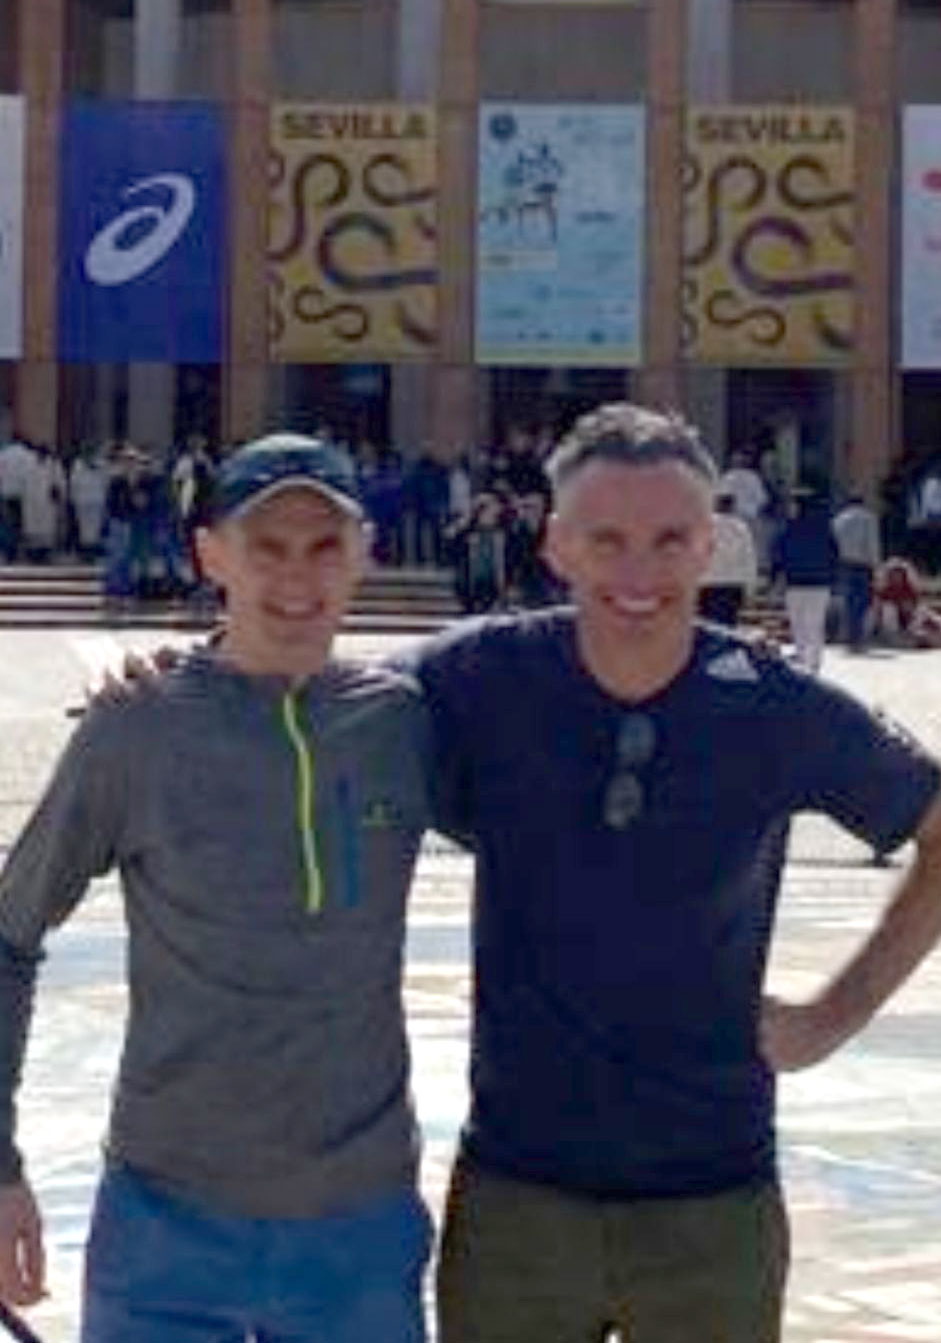 Seville Marathon